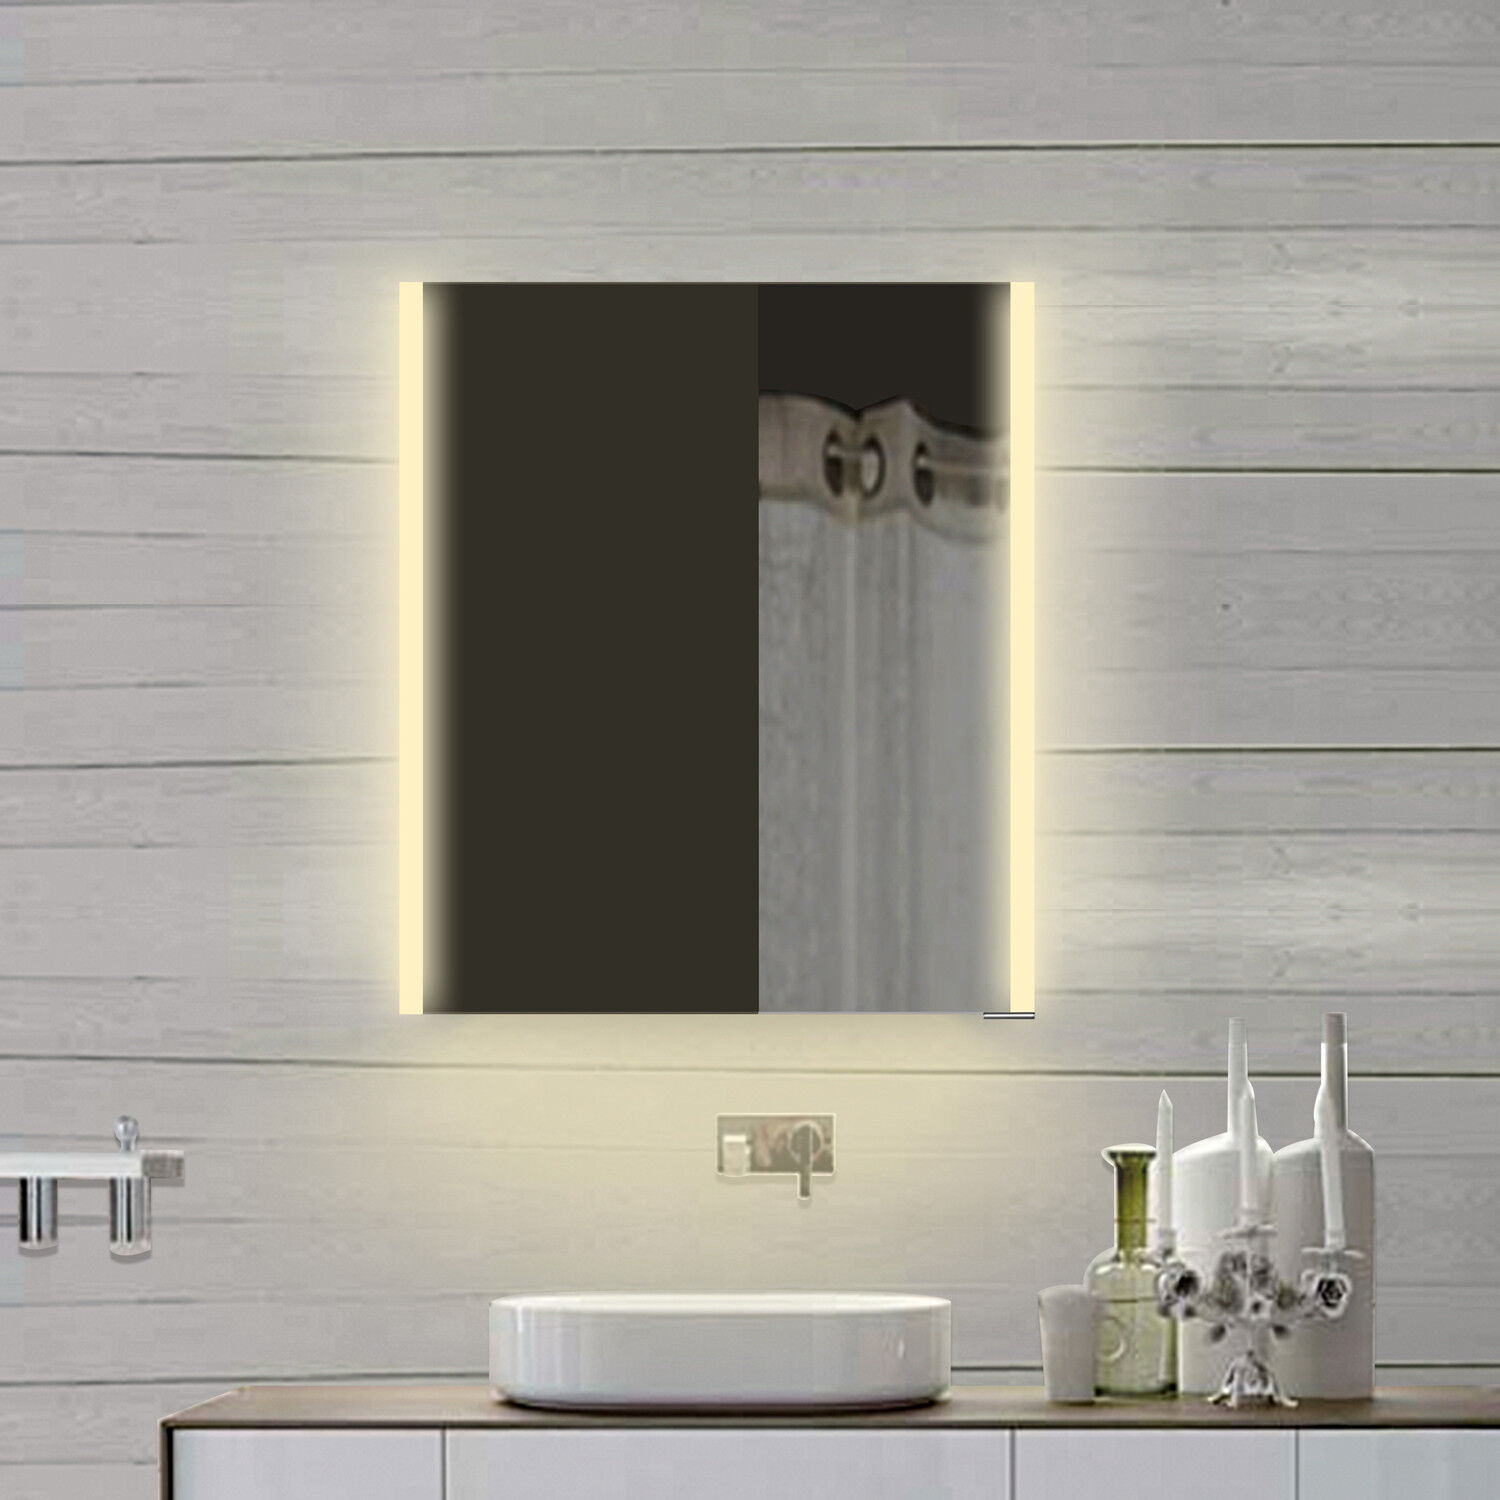 lux-aqua desging alu rahmen badezimmer wand led spiegelschrank